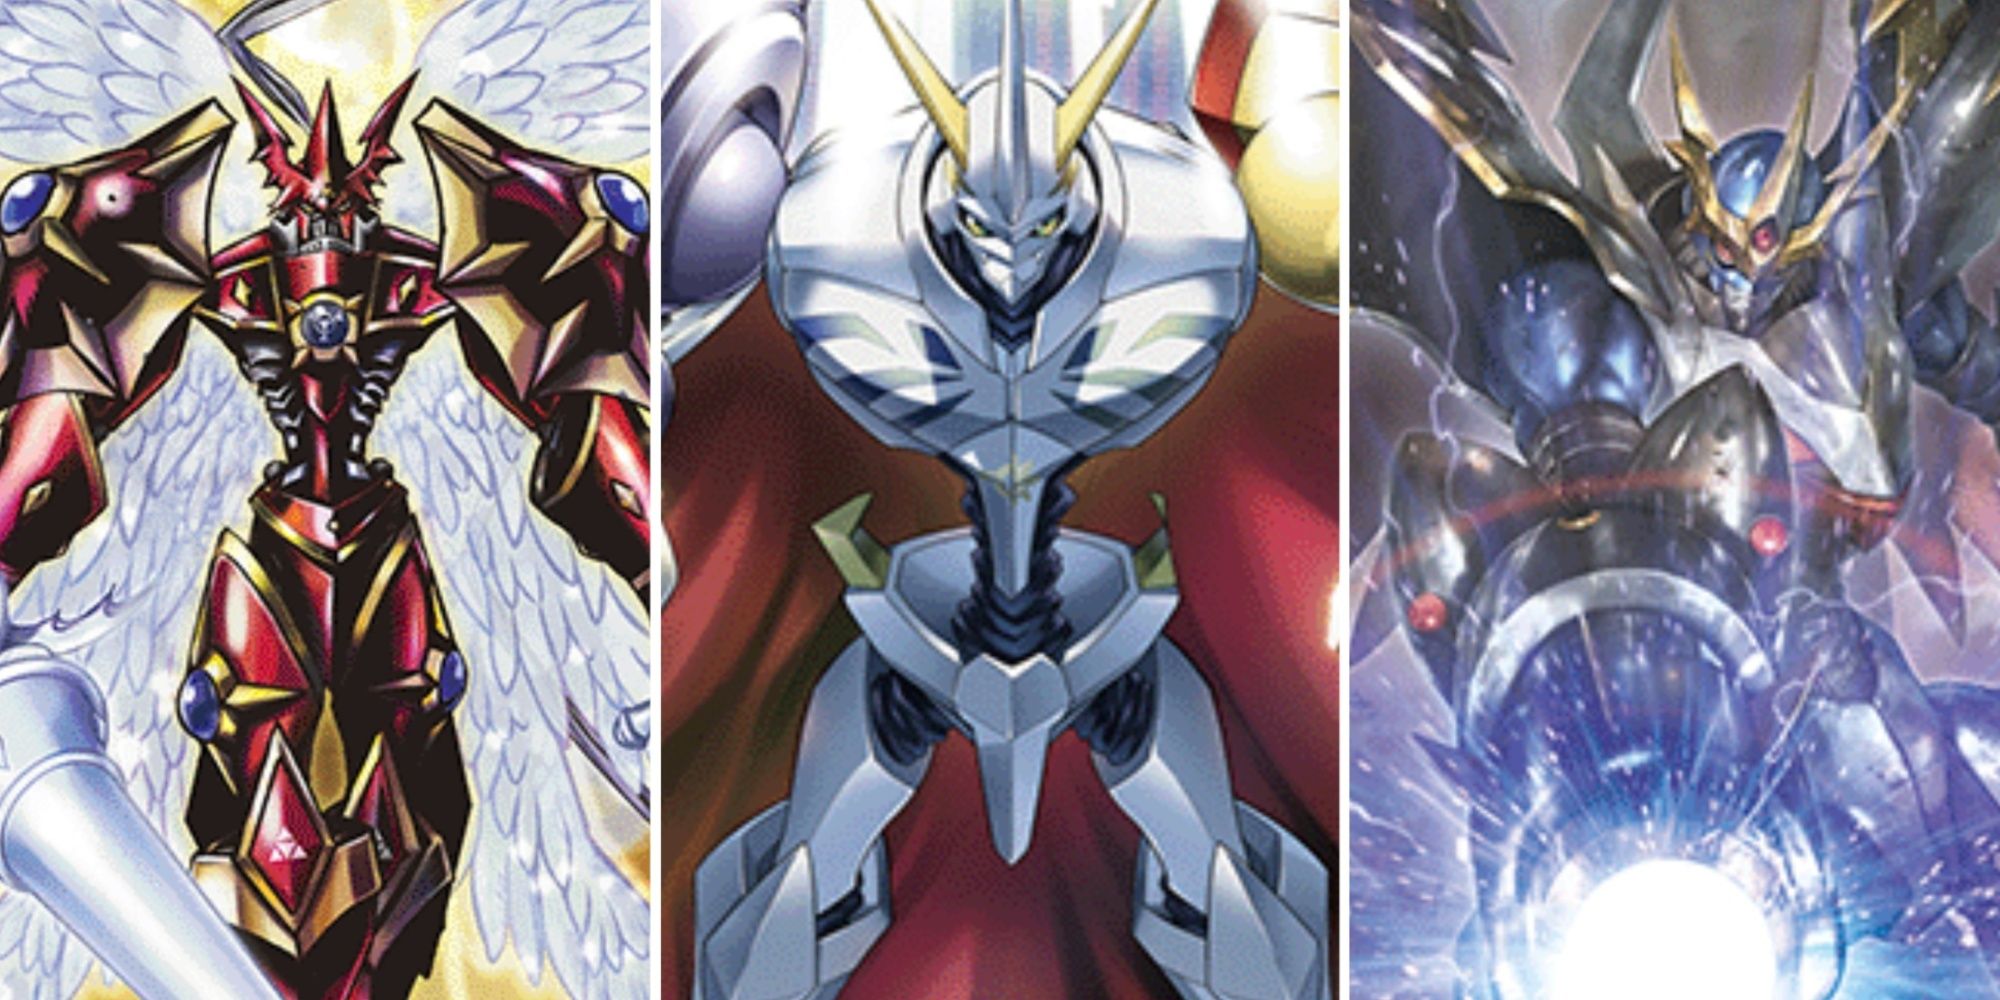 gallantmon crimson mode omnimon and imperialdramon fighter mode in featured image for most valuable promo cards digimon